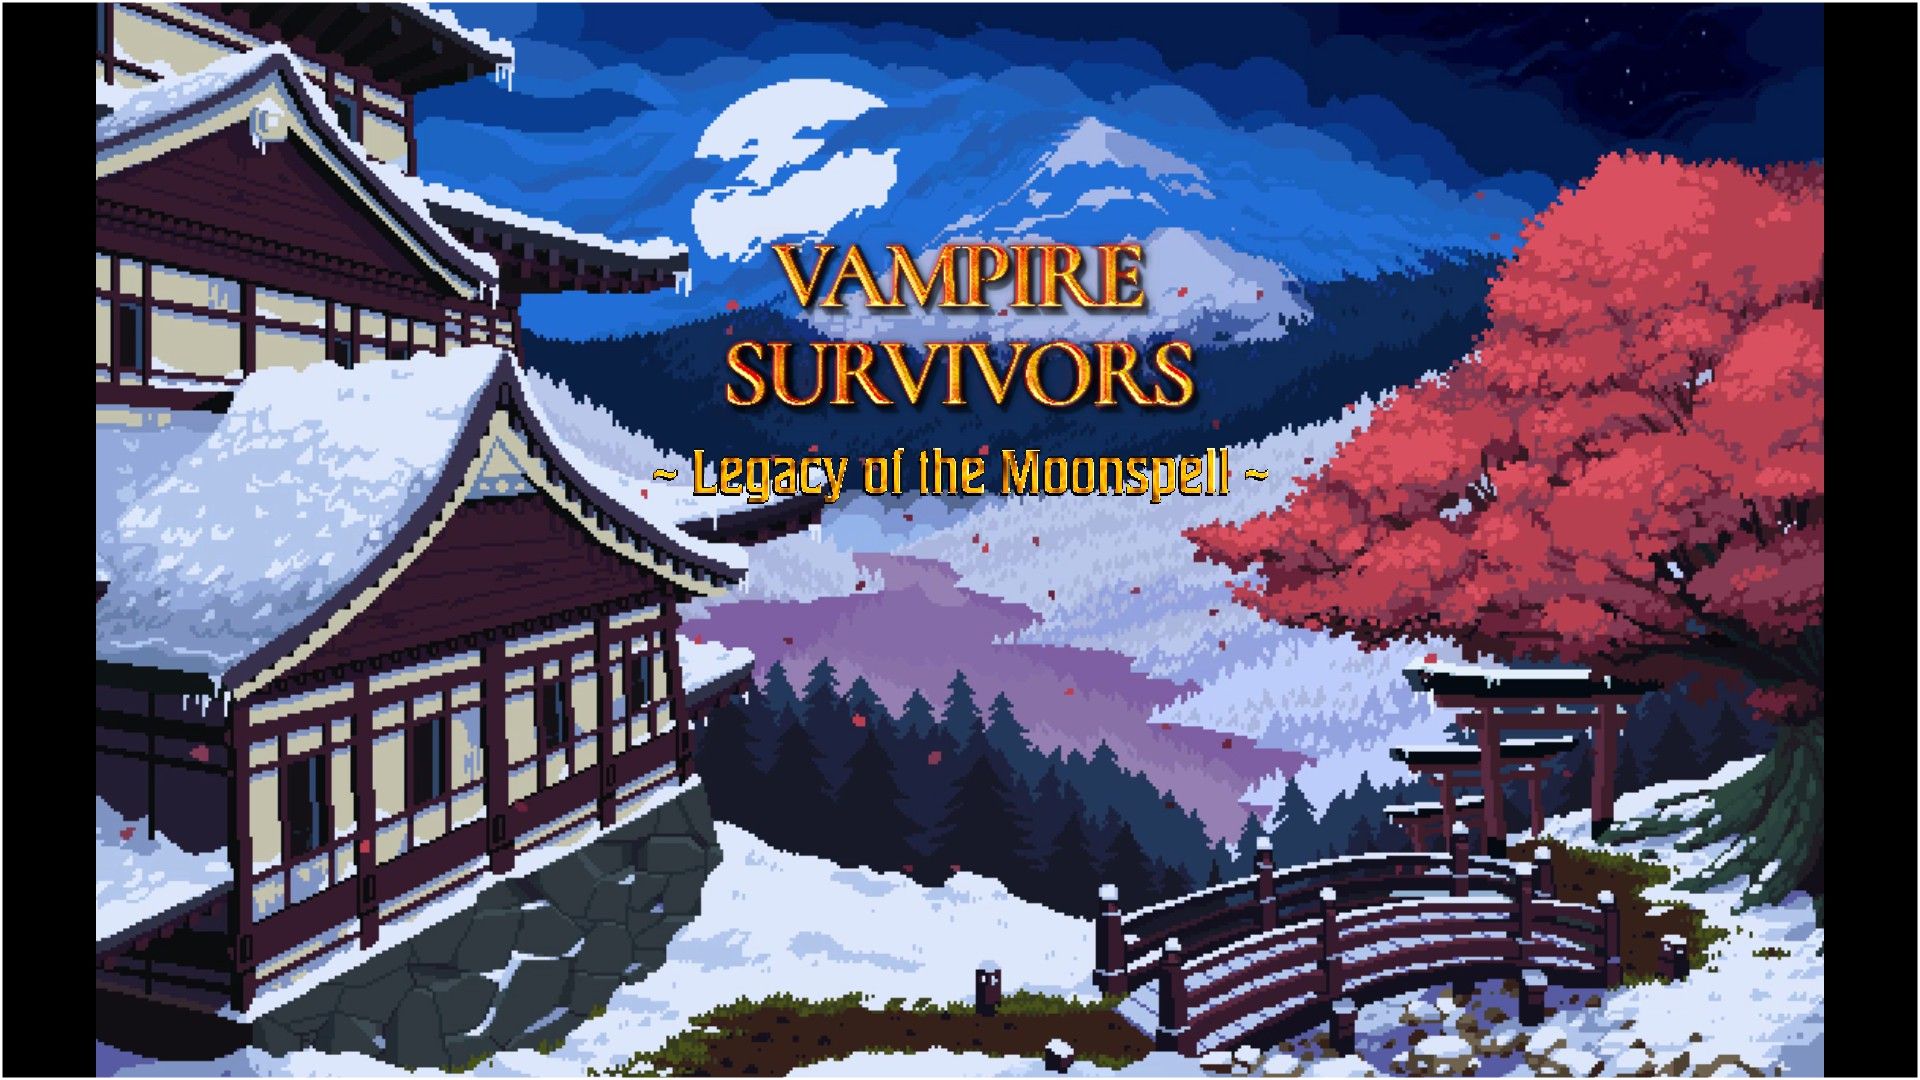 Vampire Survivors Legacy Of Moonspell DLC - Como obter todos os